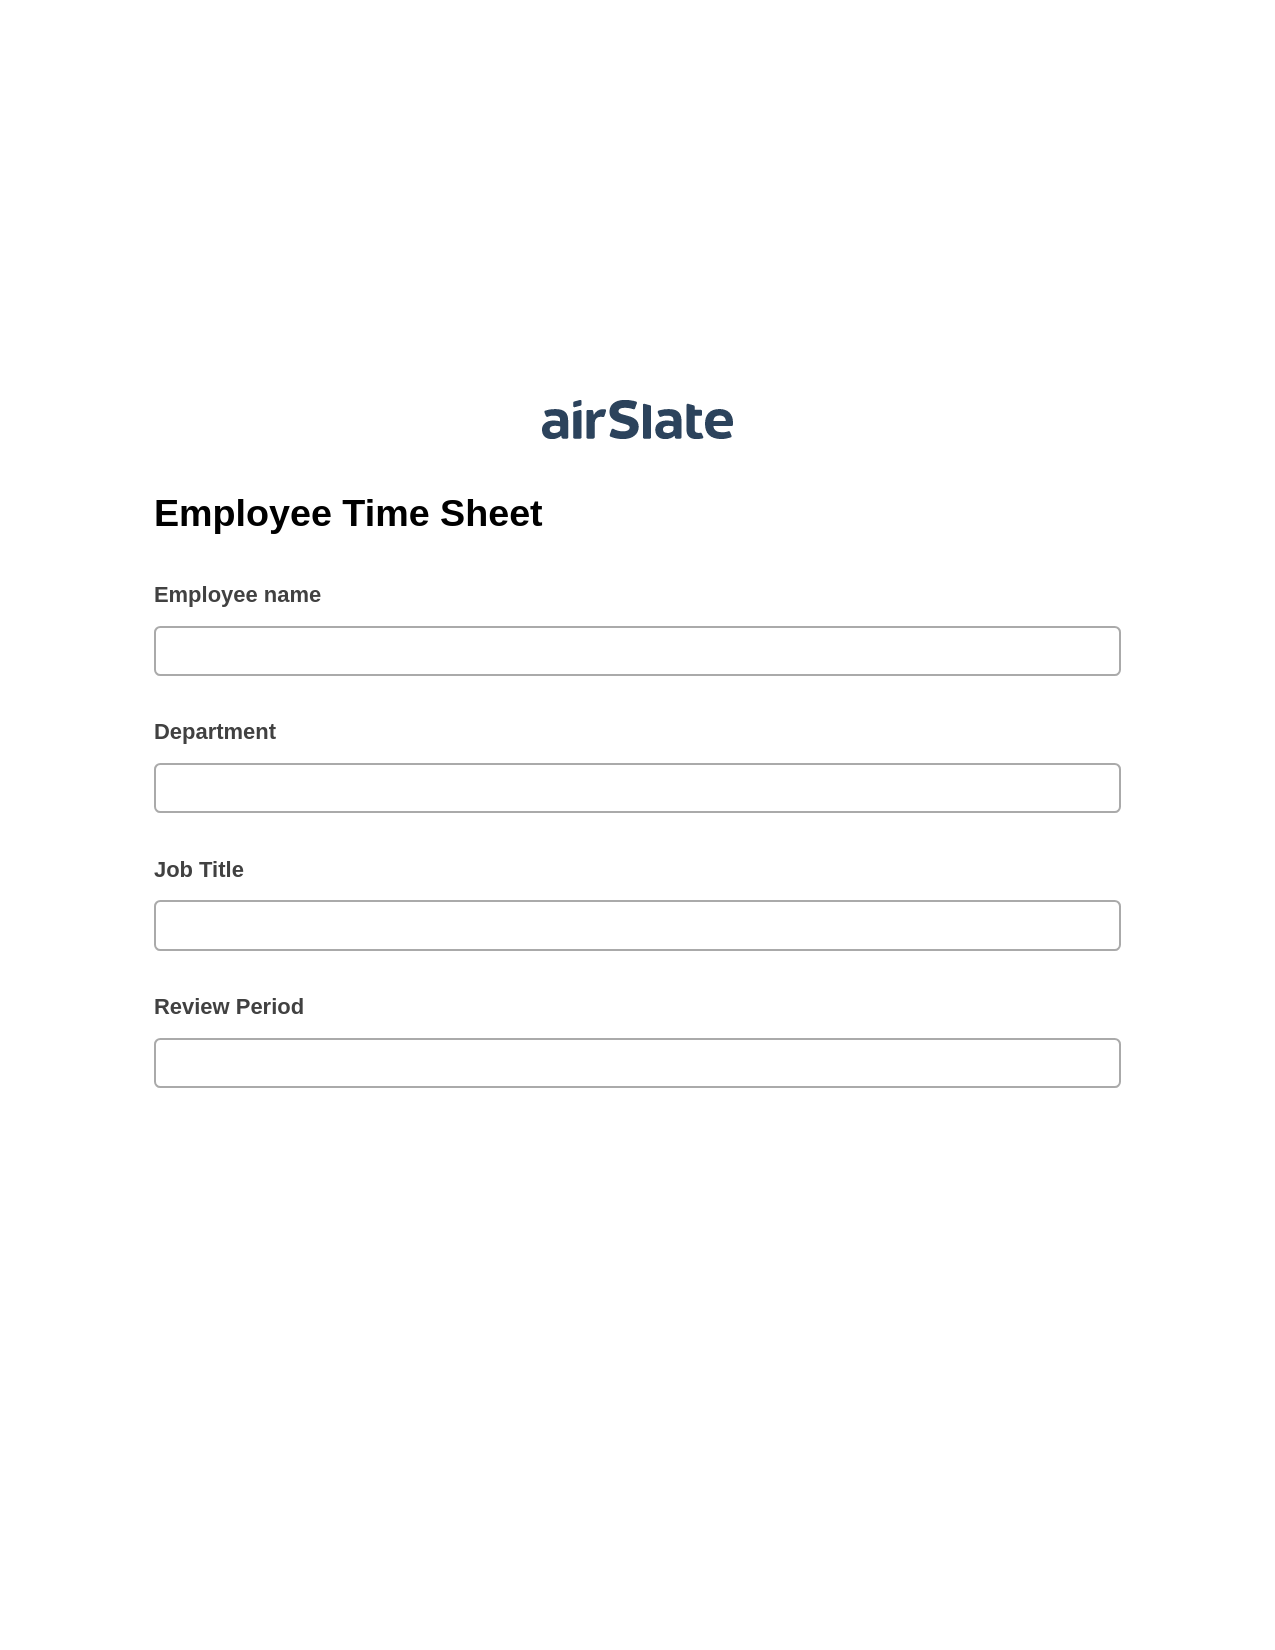 Multirole Employee Time Sheet Pre-fill from Google Sheets Bot, Revoke Access Bot, Archive to Google Drive Bot